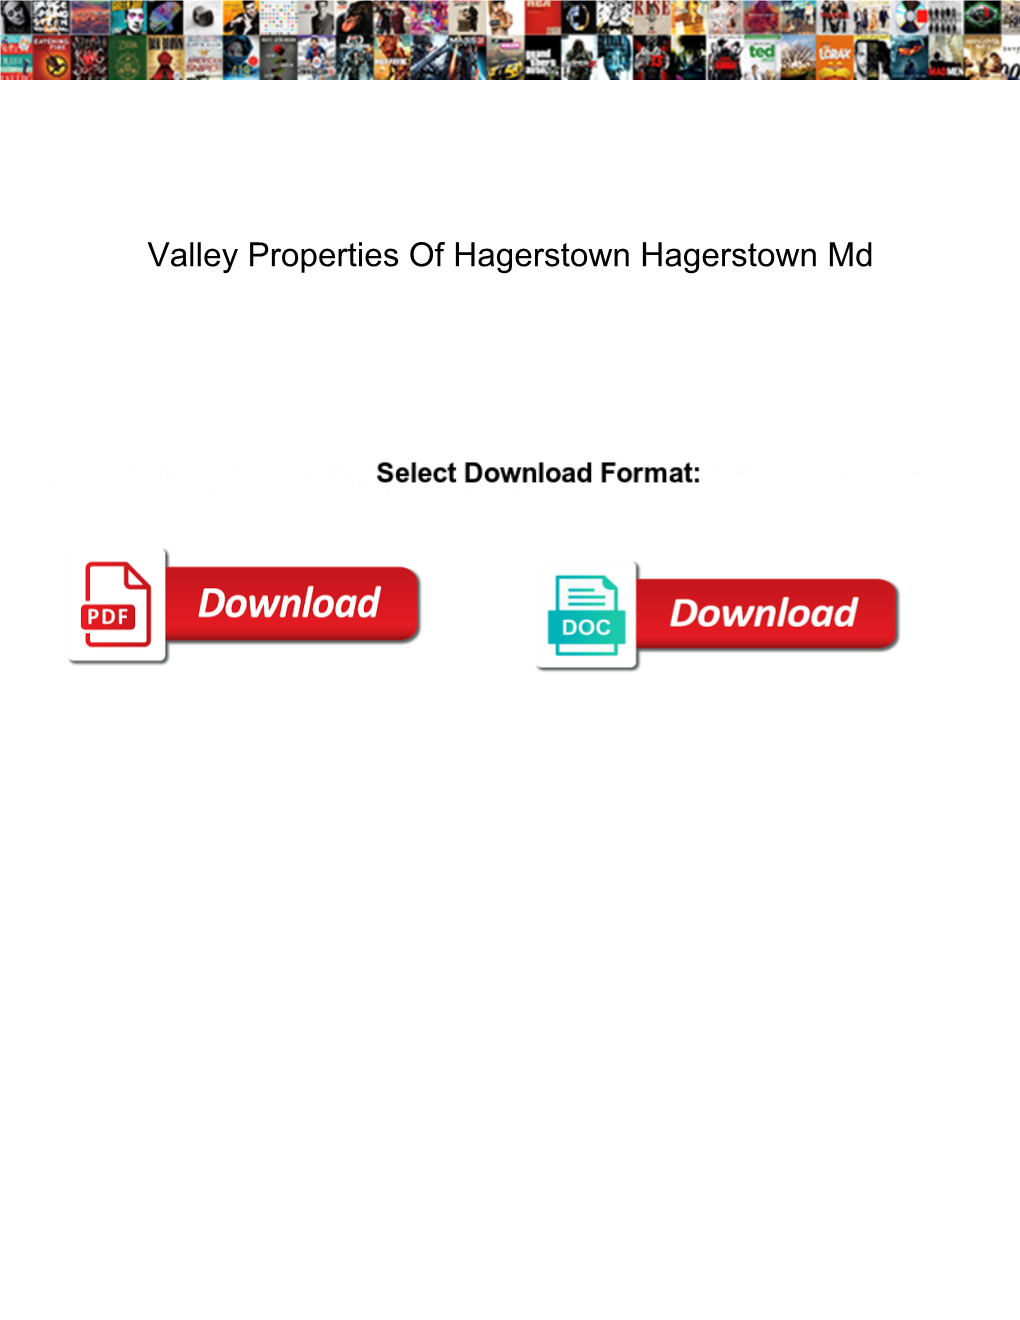 Valley Properties of Hagerstown Hagerstown Md